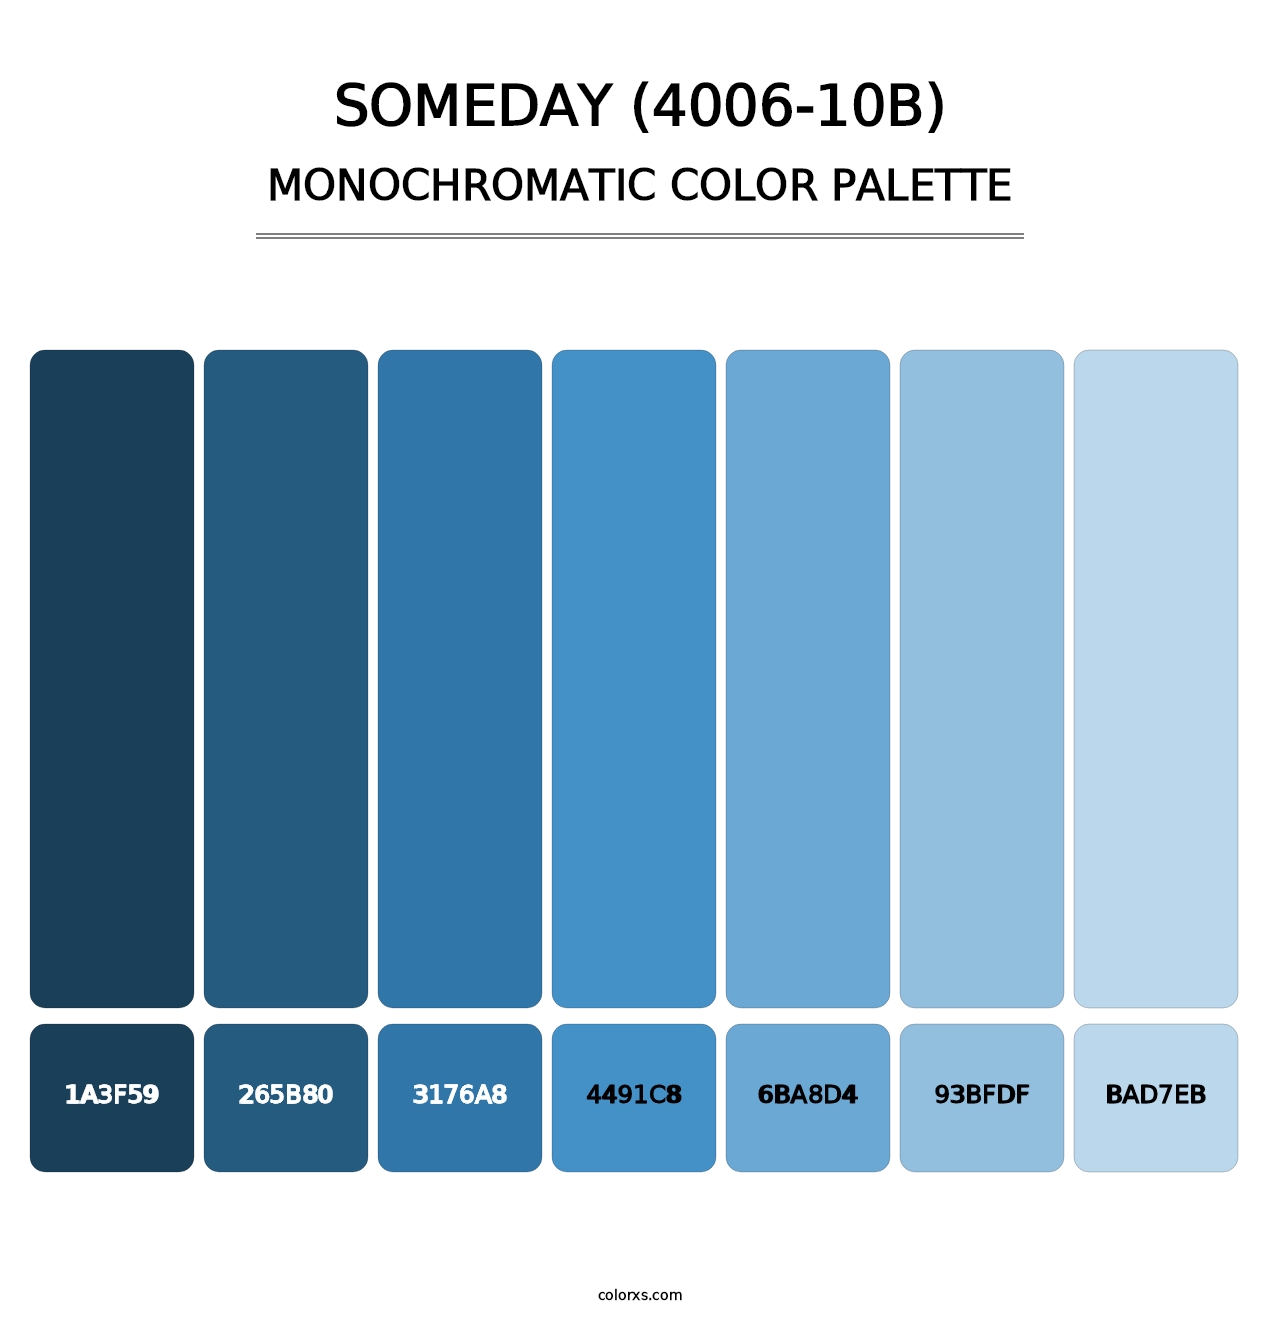 Someday (4006-10B) - Monochromatic Color Palette